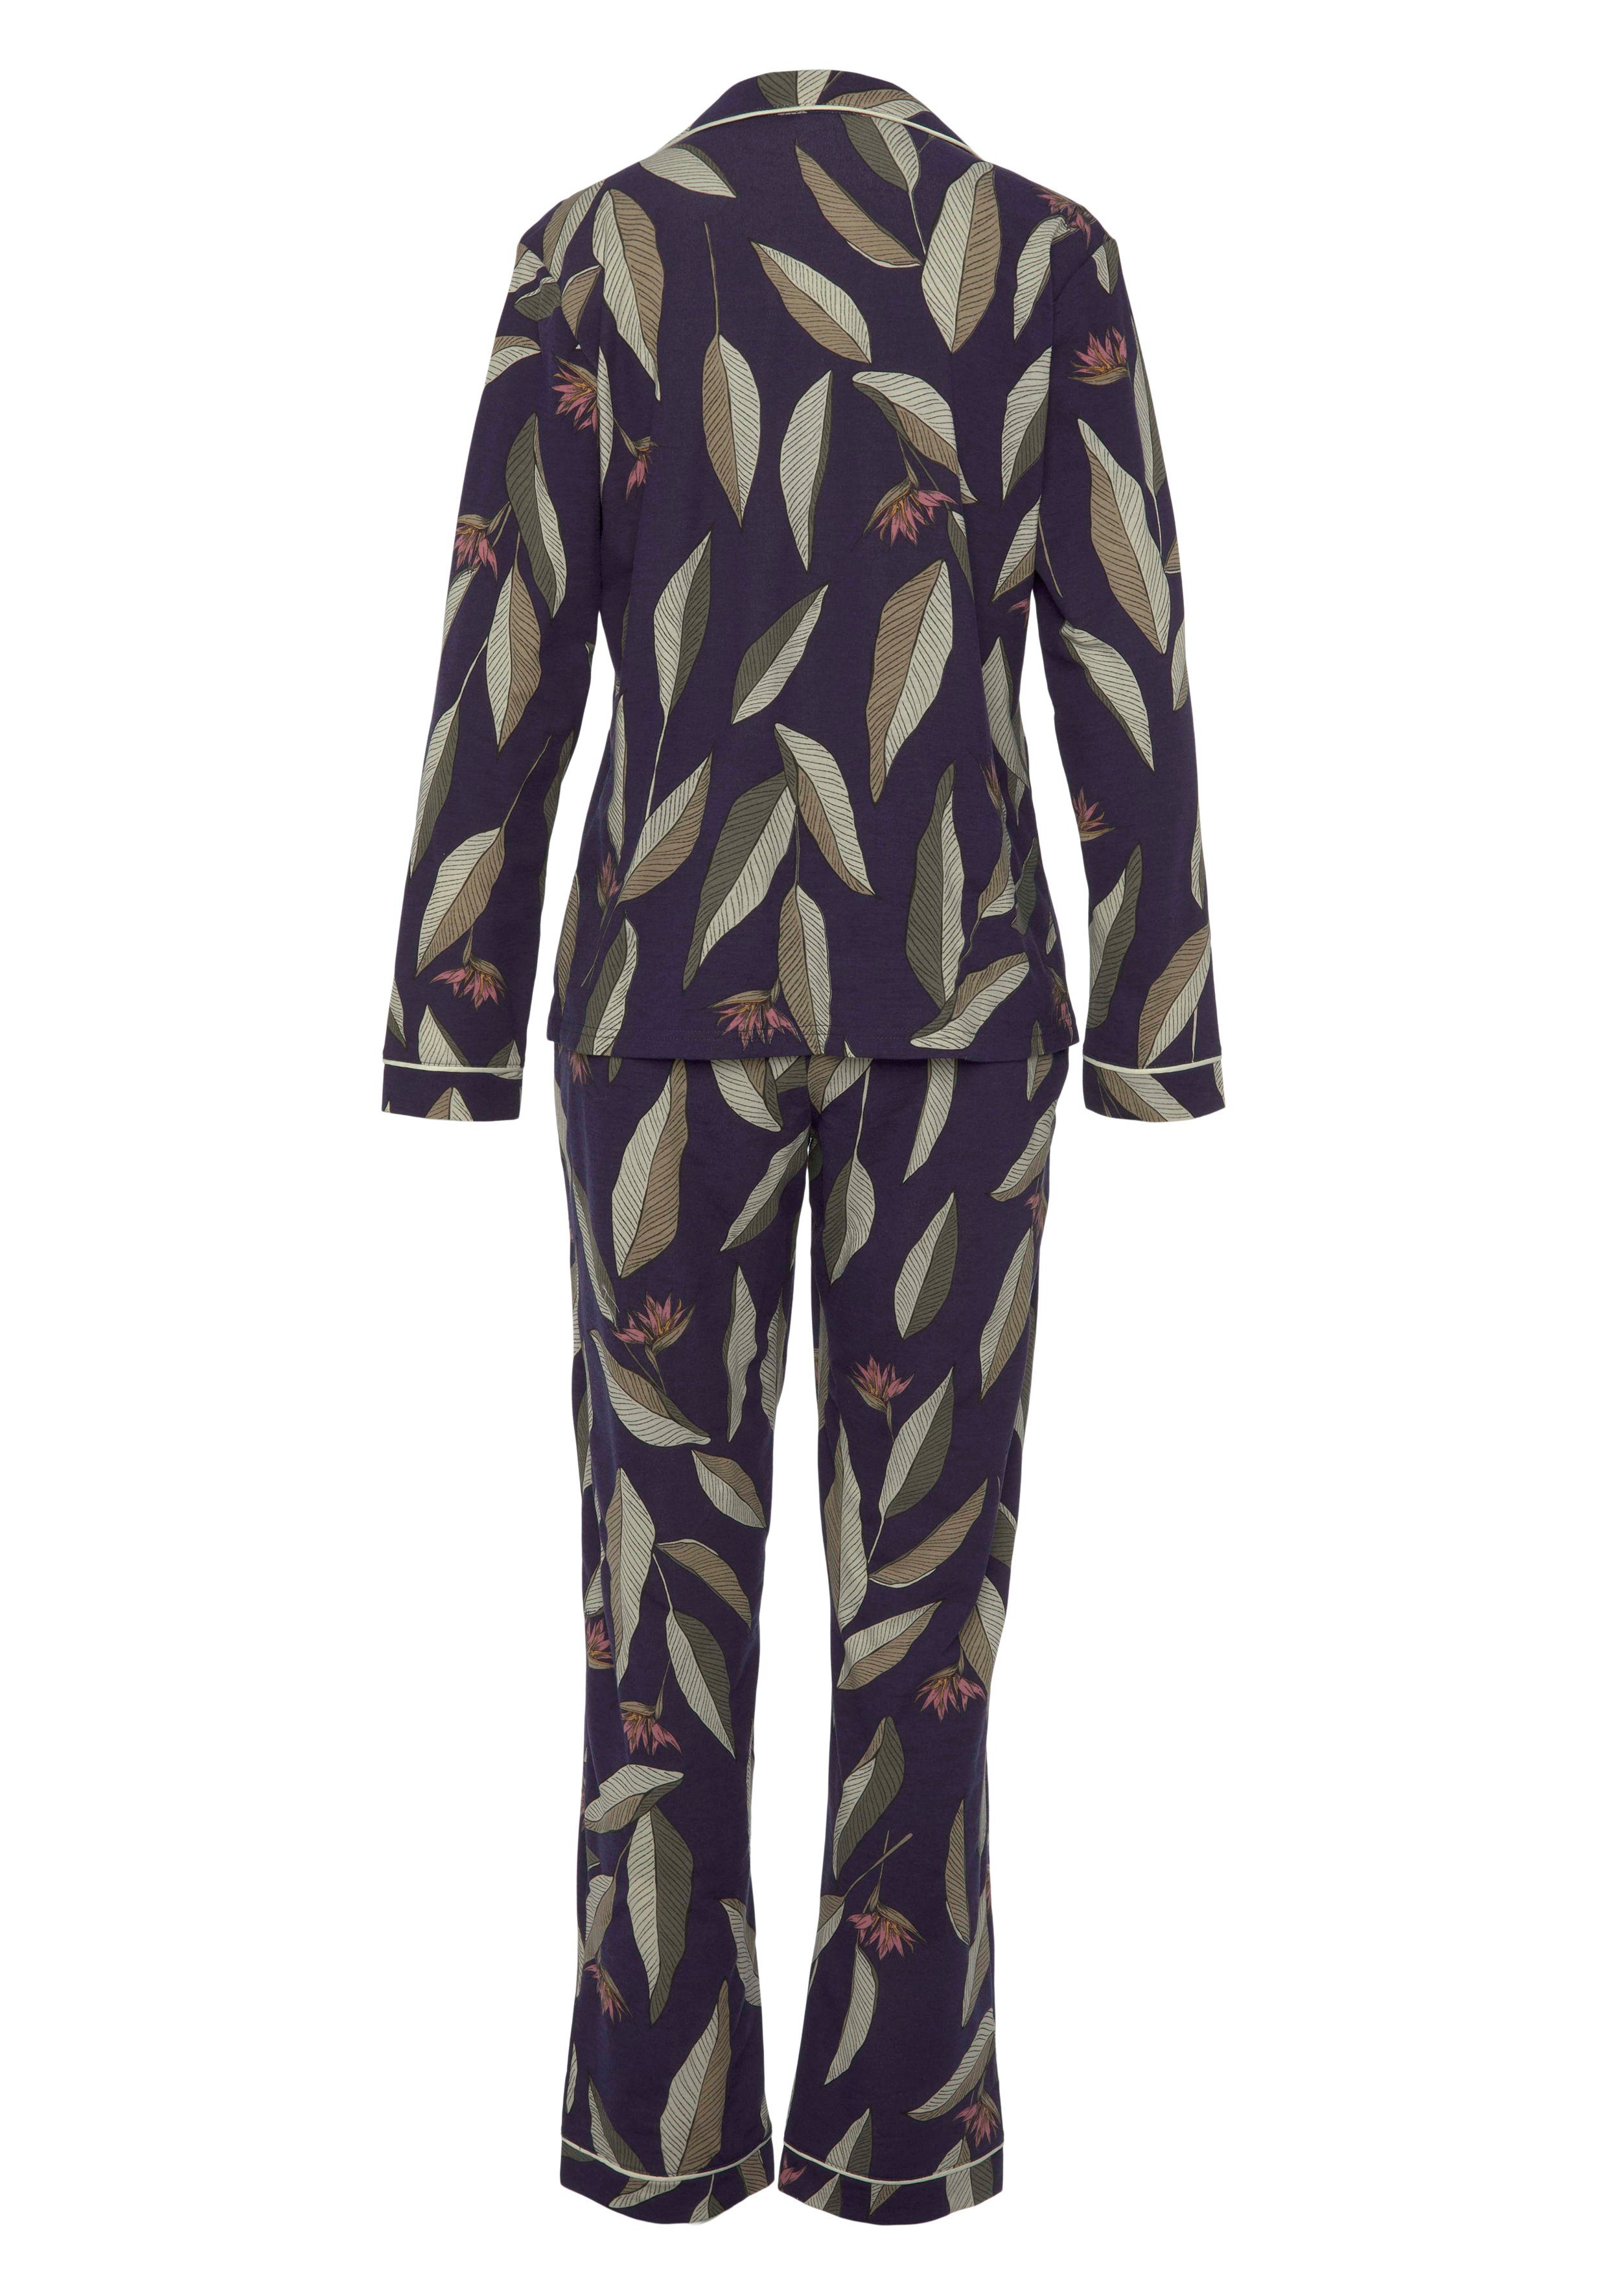 LASCANA Pyjama (2 klassischen im dunkellila-gemustert tlg) Schnitt